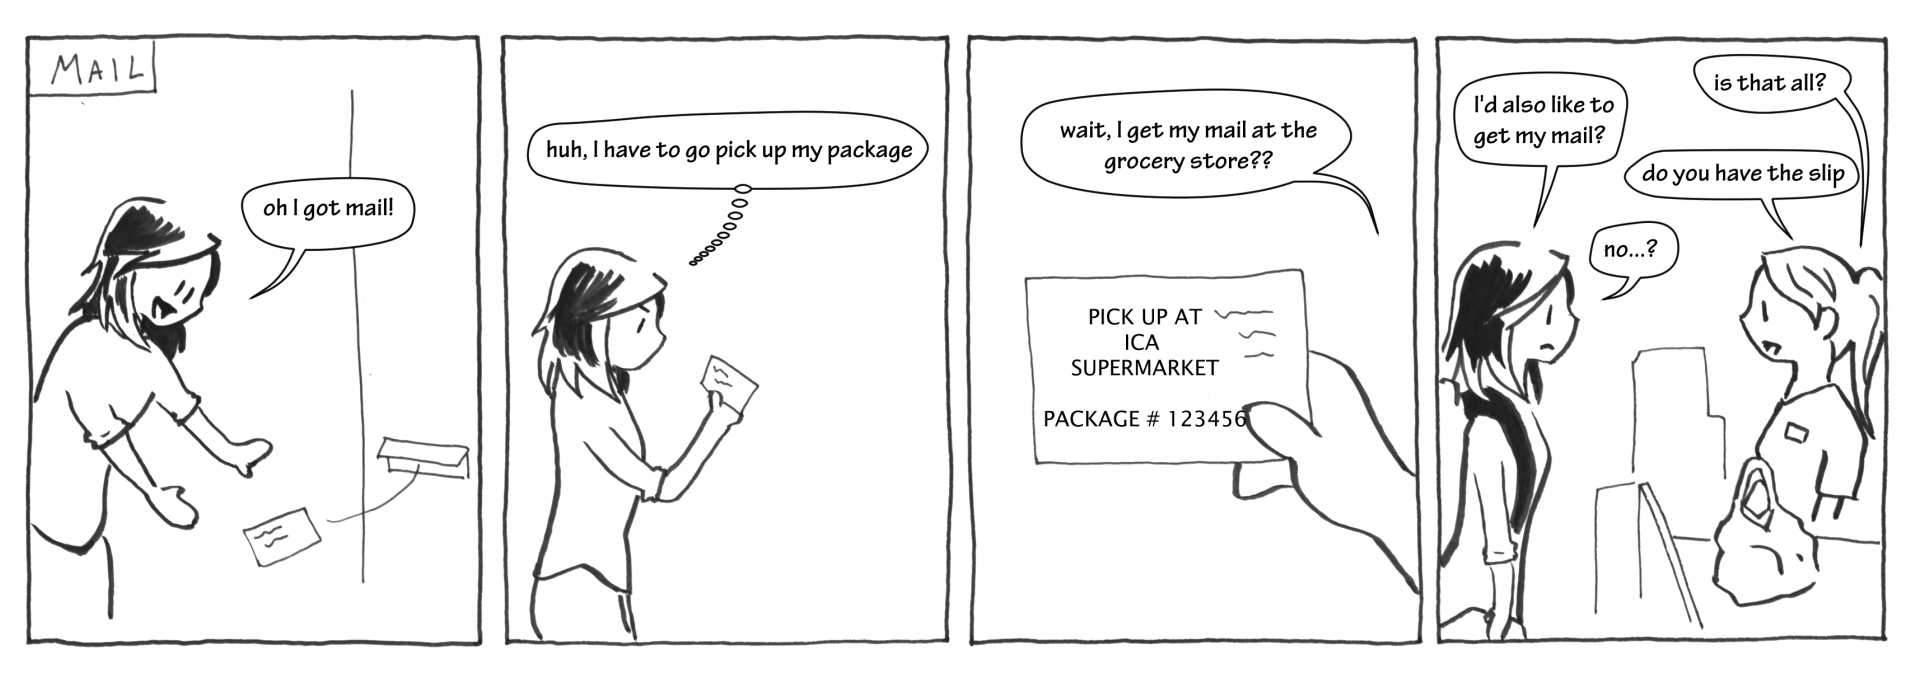 mail comic